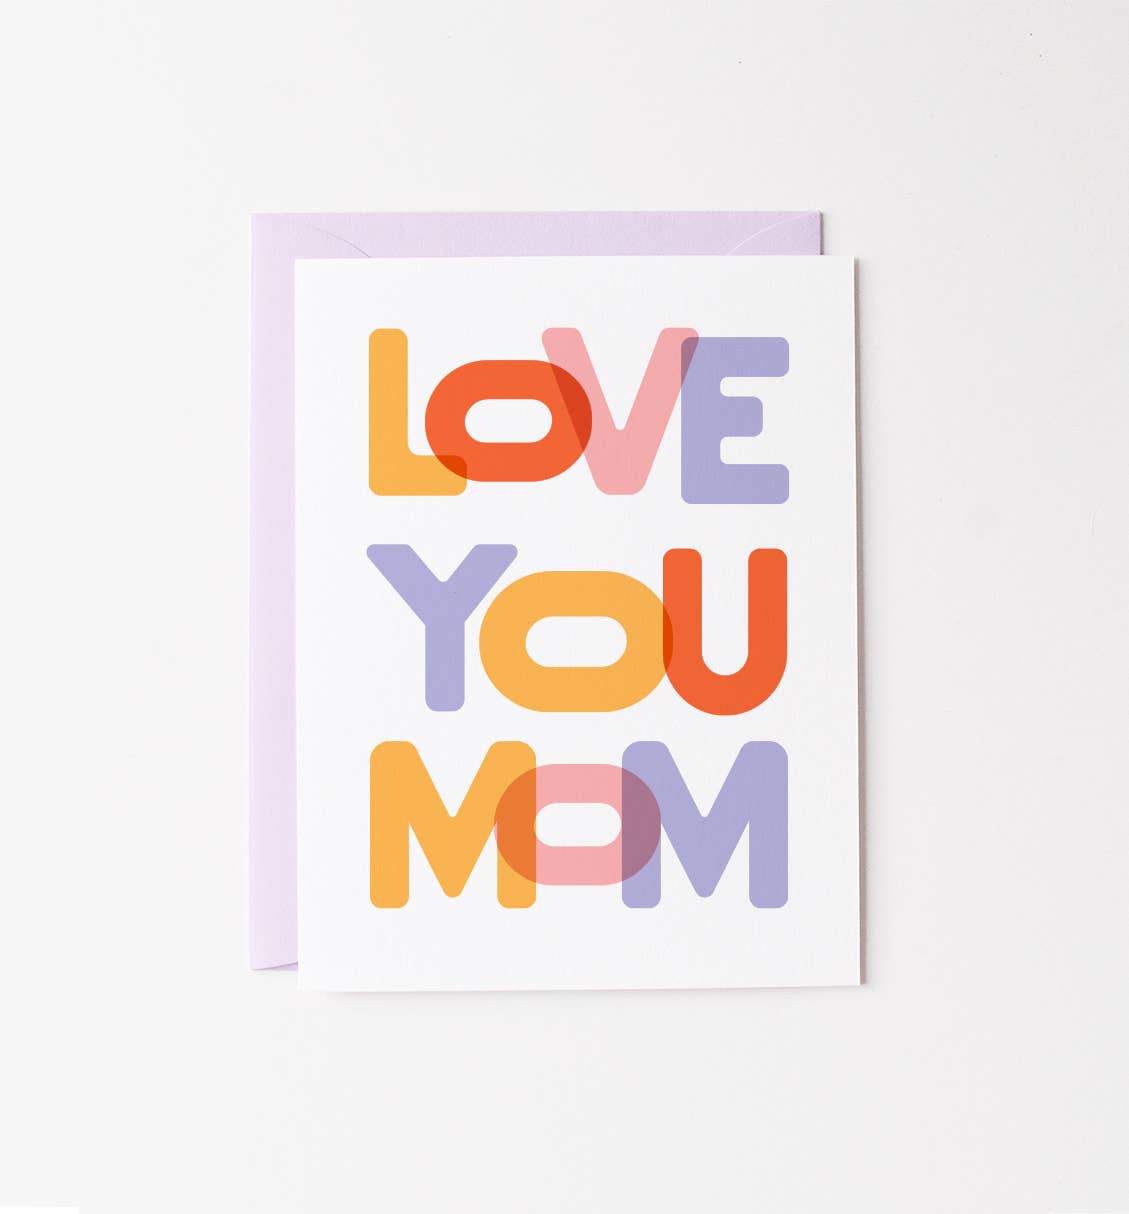 Love You Mom card